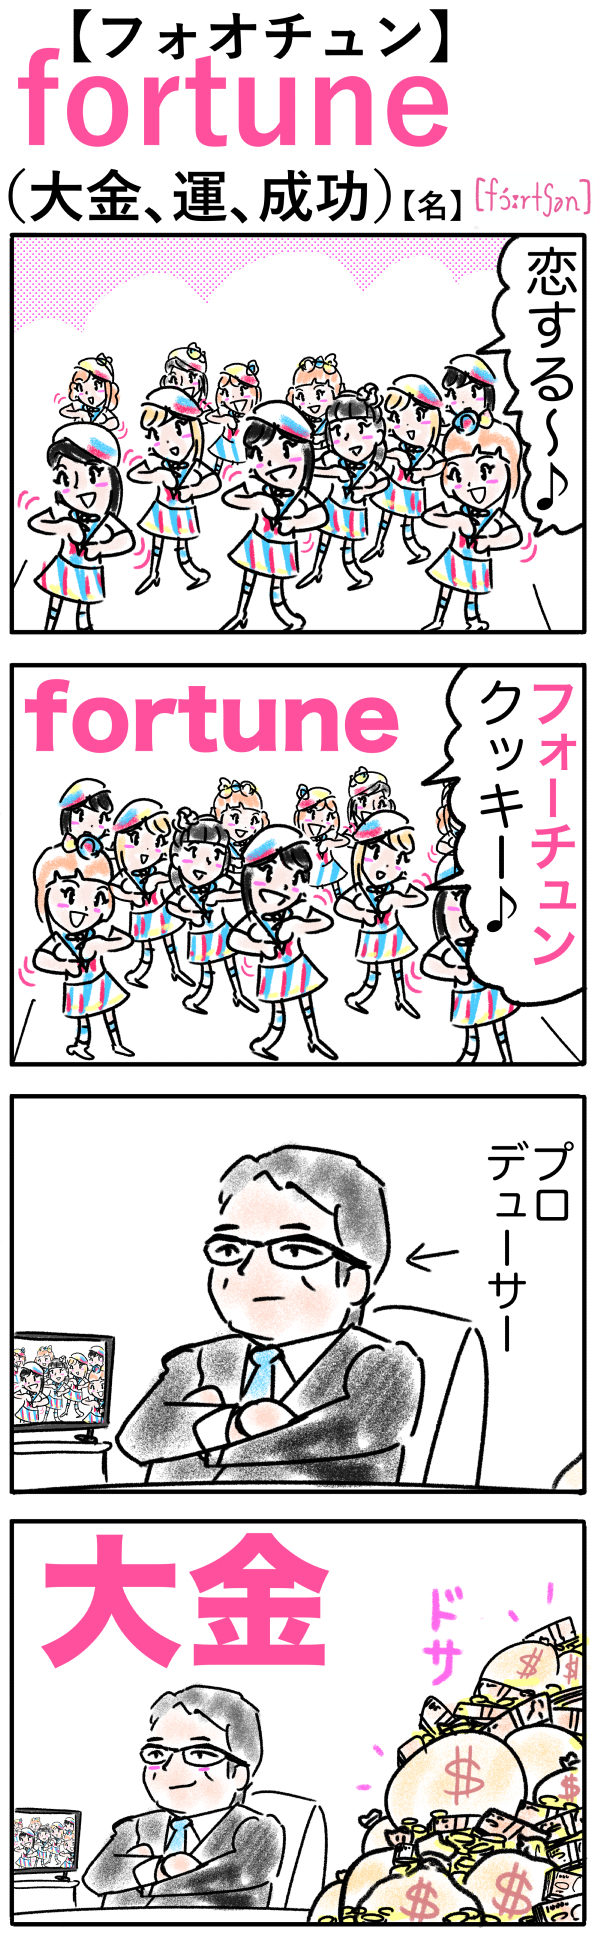 fortune（大金）の語呂合わせ英単語